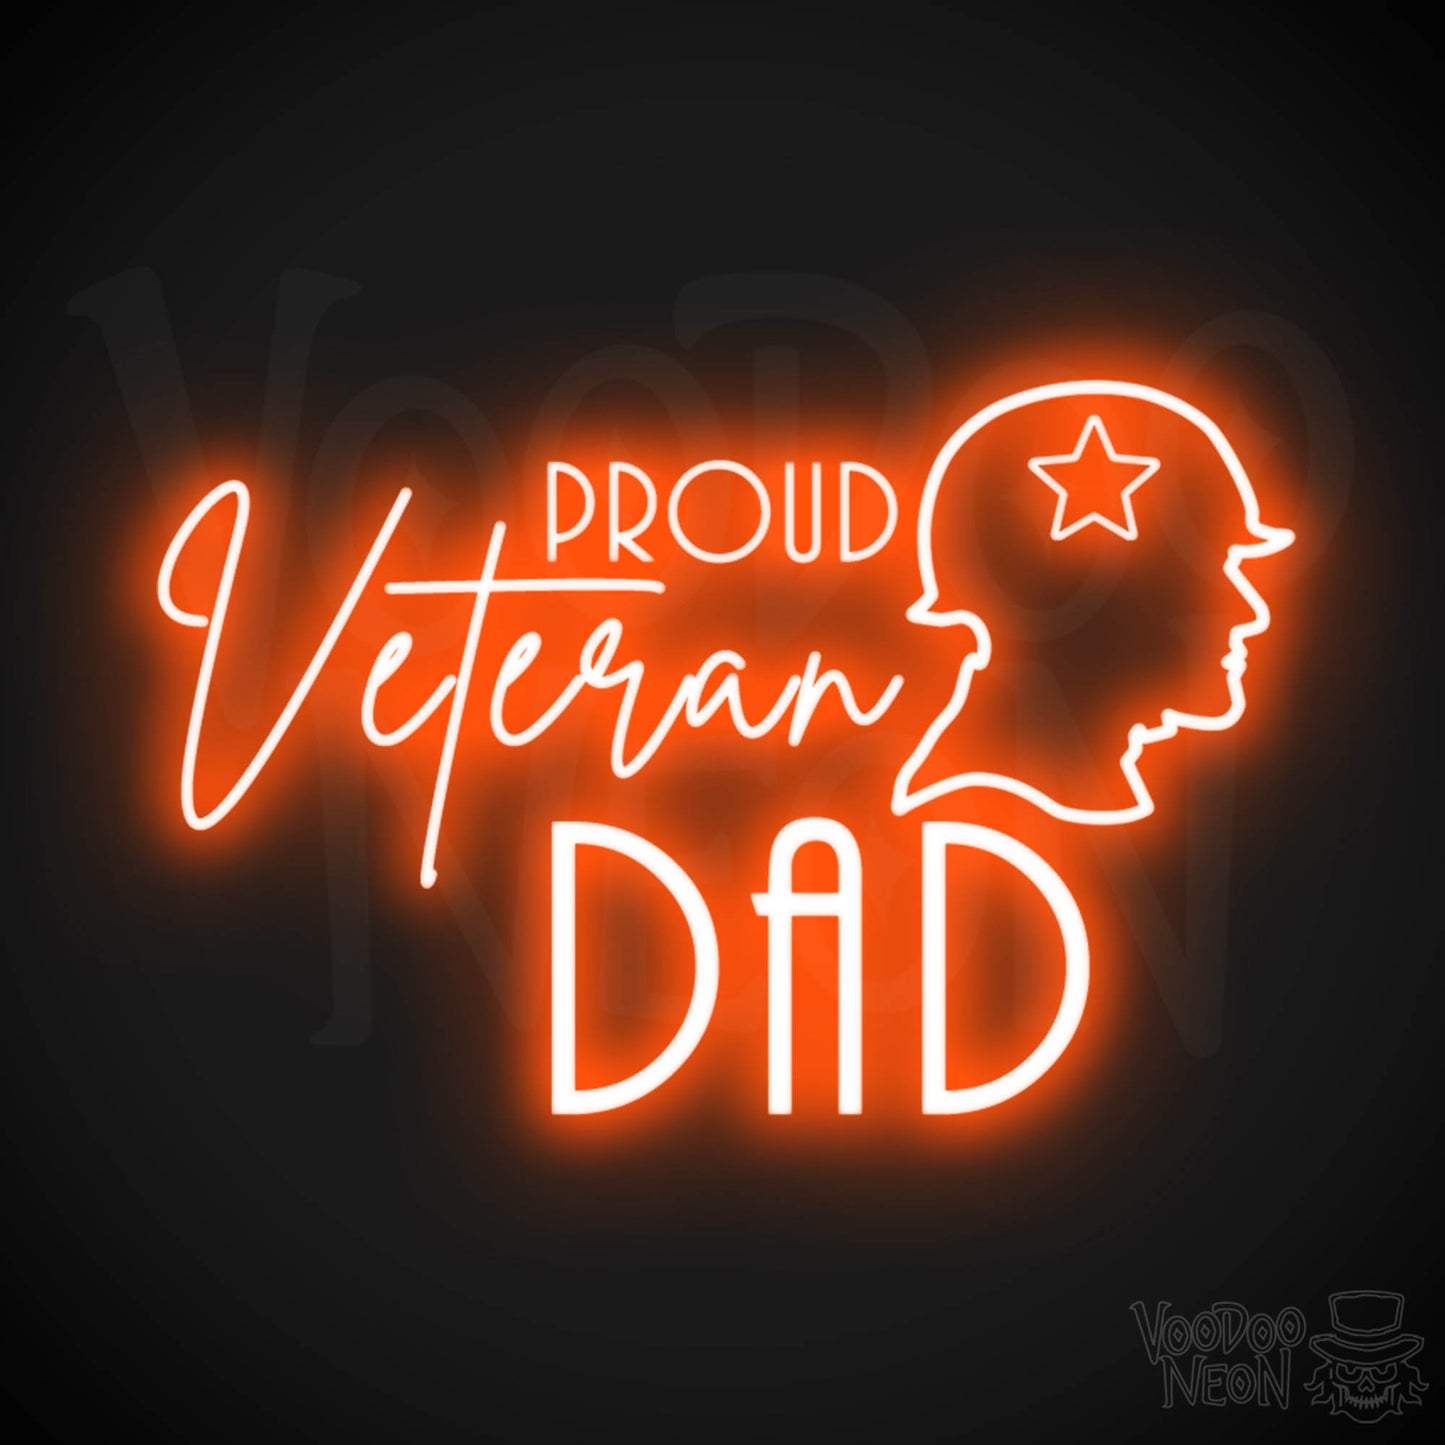 Proud Veteran Dad Neon Sign - Proud Veteran Dad Sign - Neon Veteran Wall Art - Color Orange